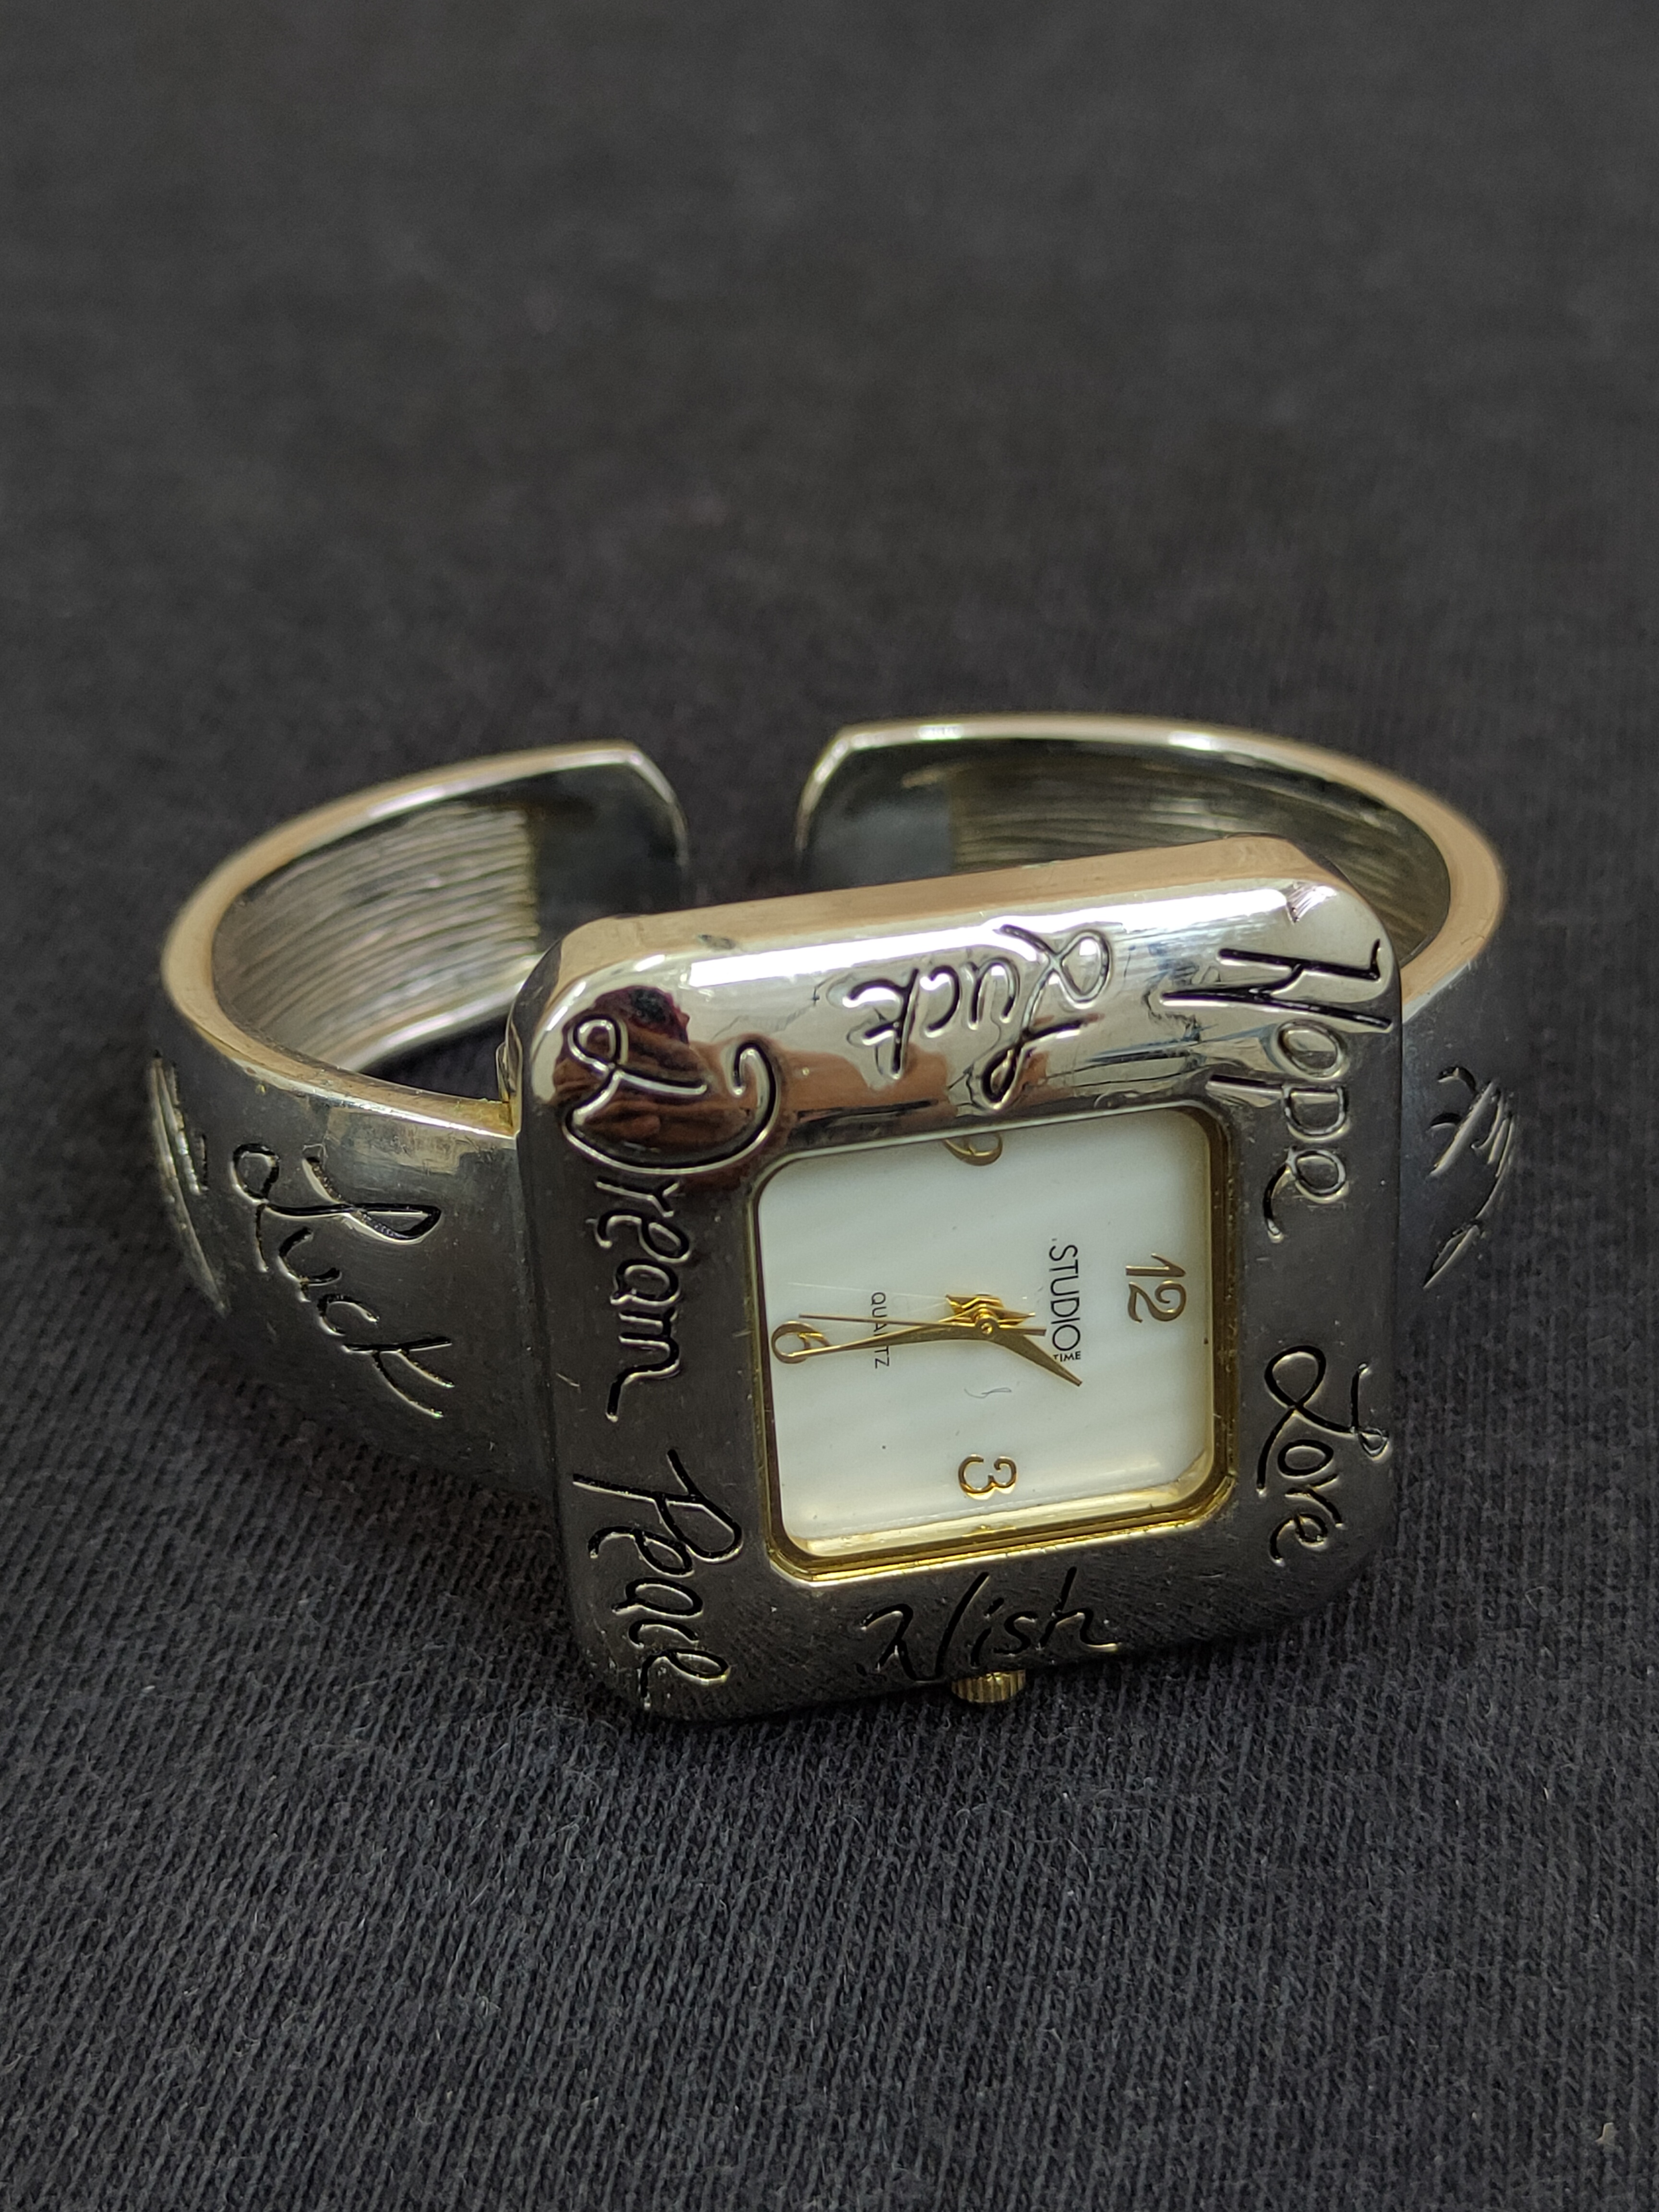 Japanese Brand - Studio Time watch like bracelet art design - 2